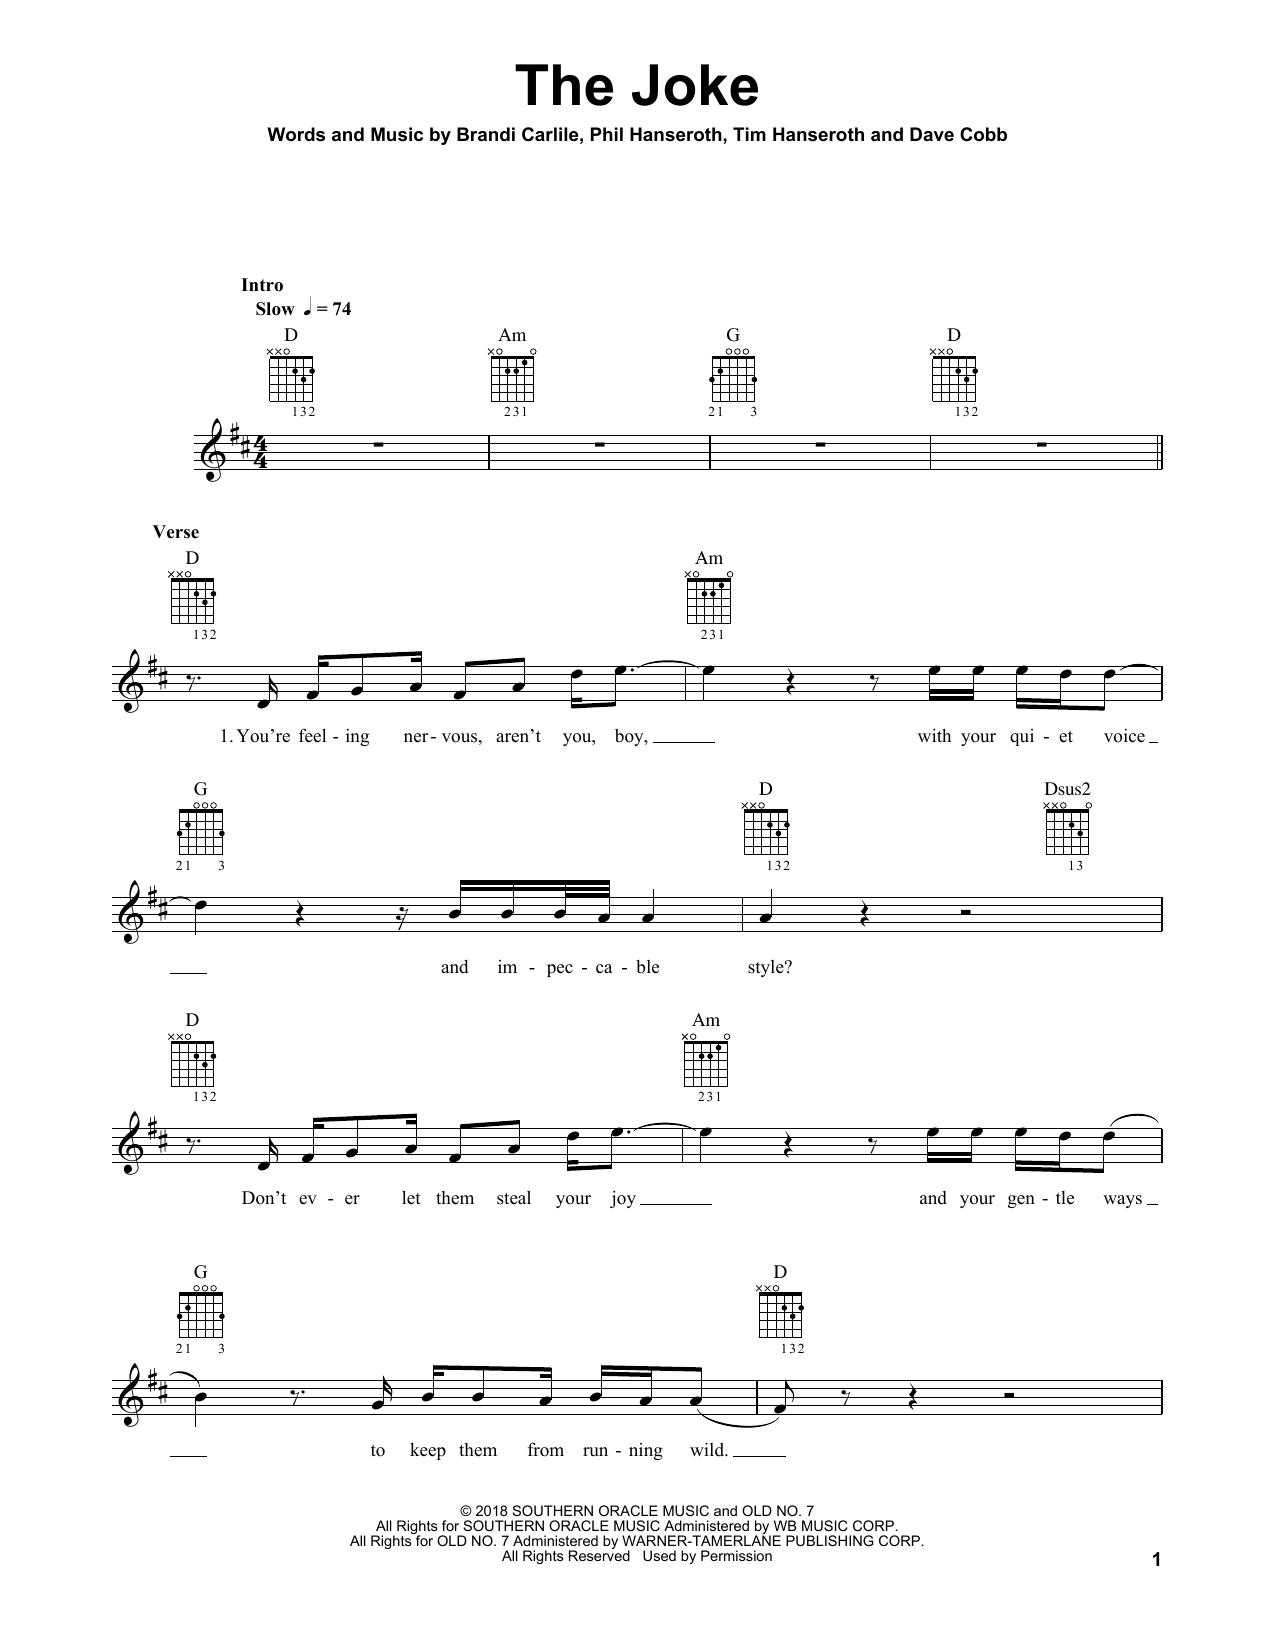 Download Brandi Carlile The Joke Sheet Music and learn how to play Guitar Tab PDF digital score in minutes